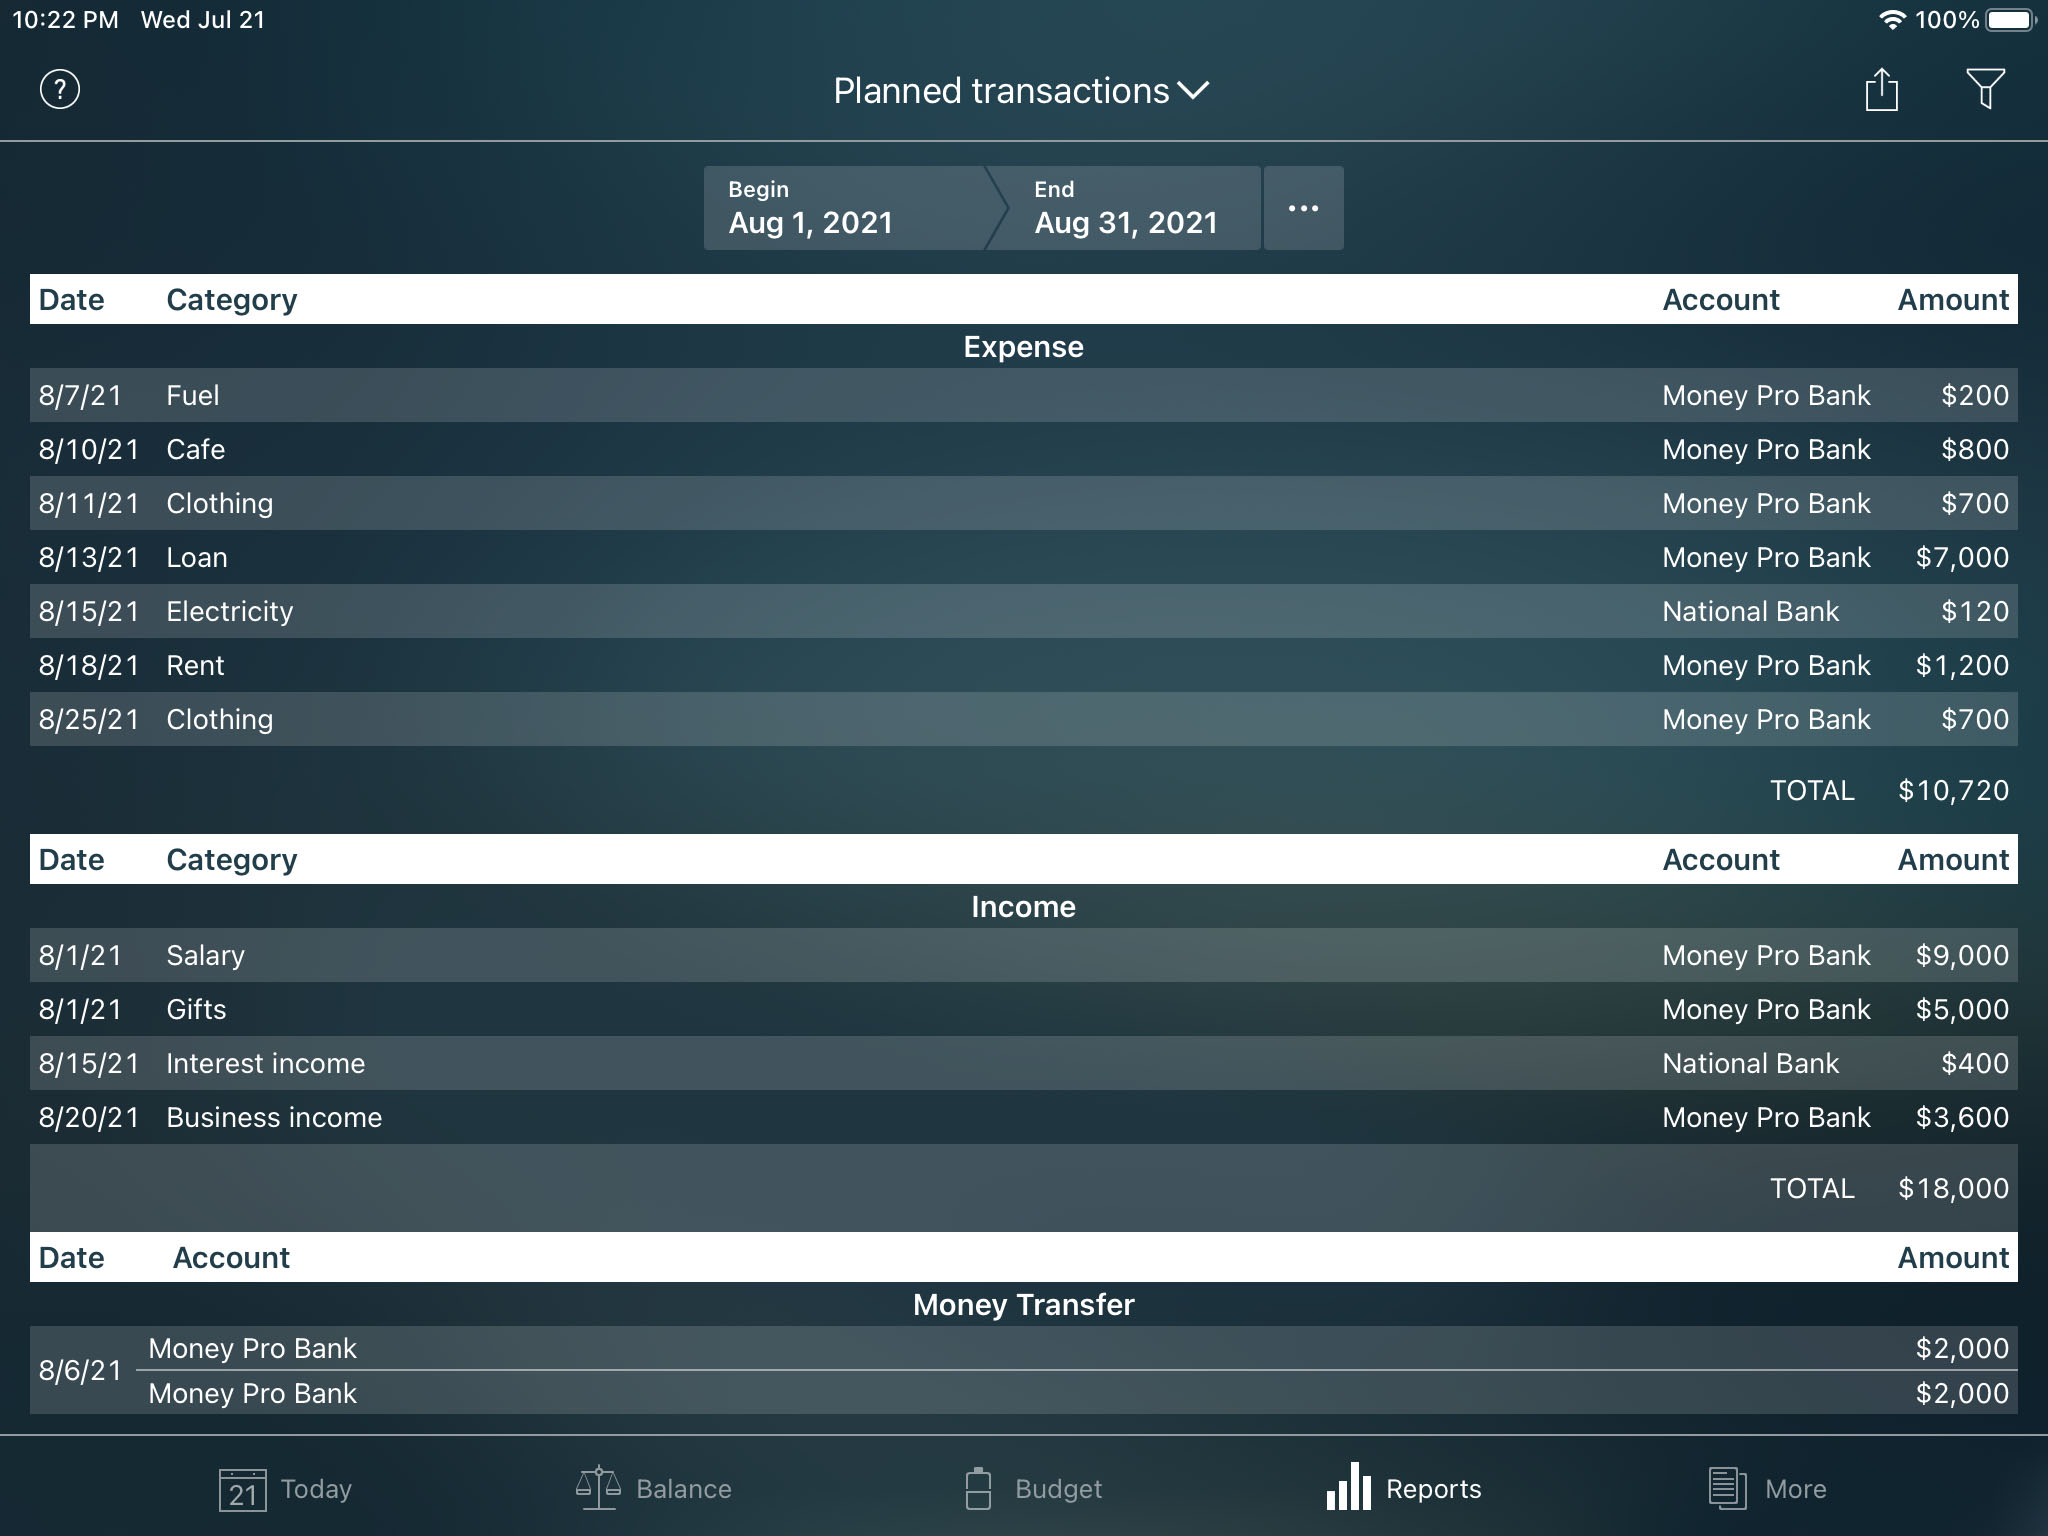 Money Pro - Planned transactions report - iPad